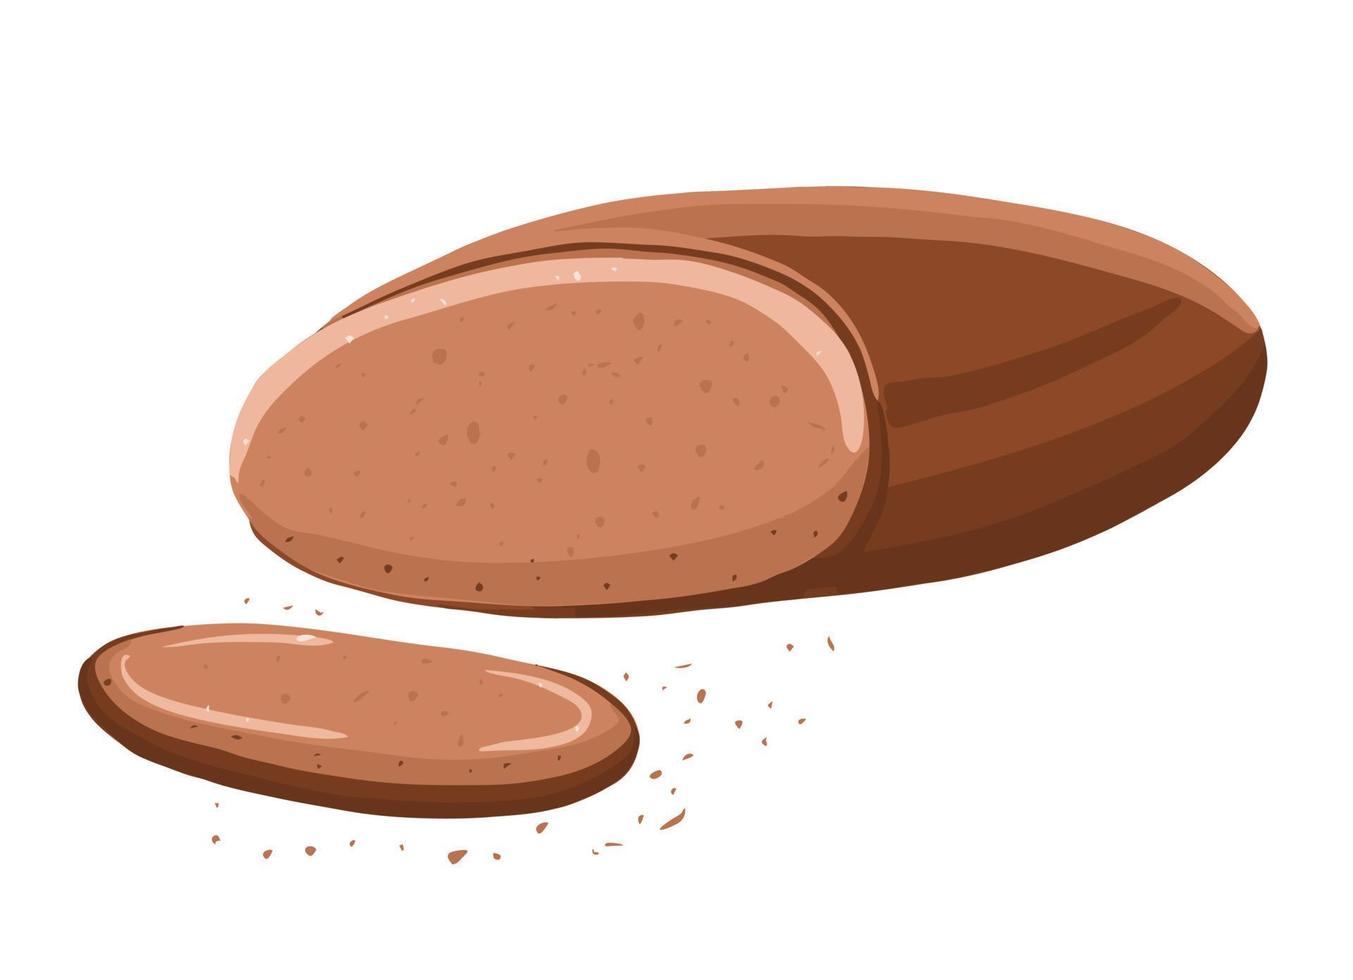 Dark bread in cartoon style vector